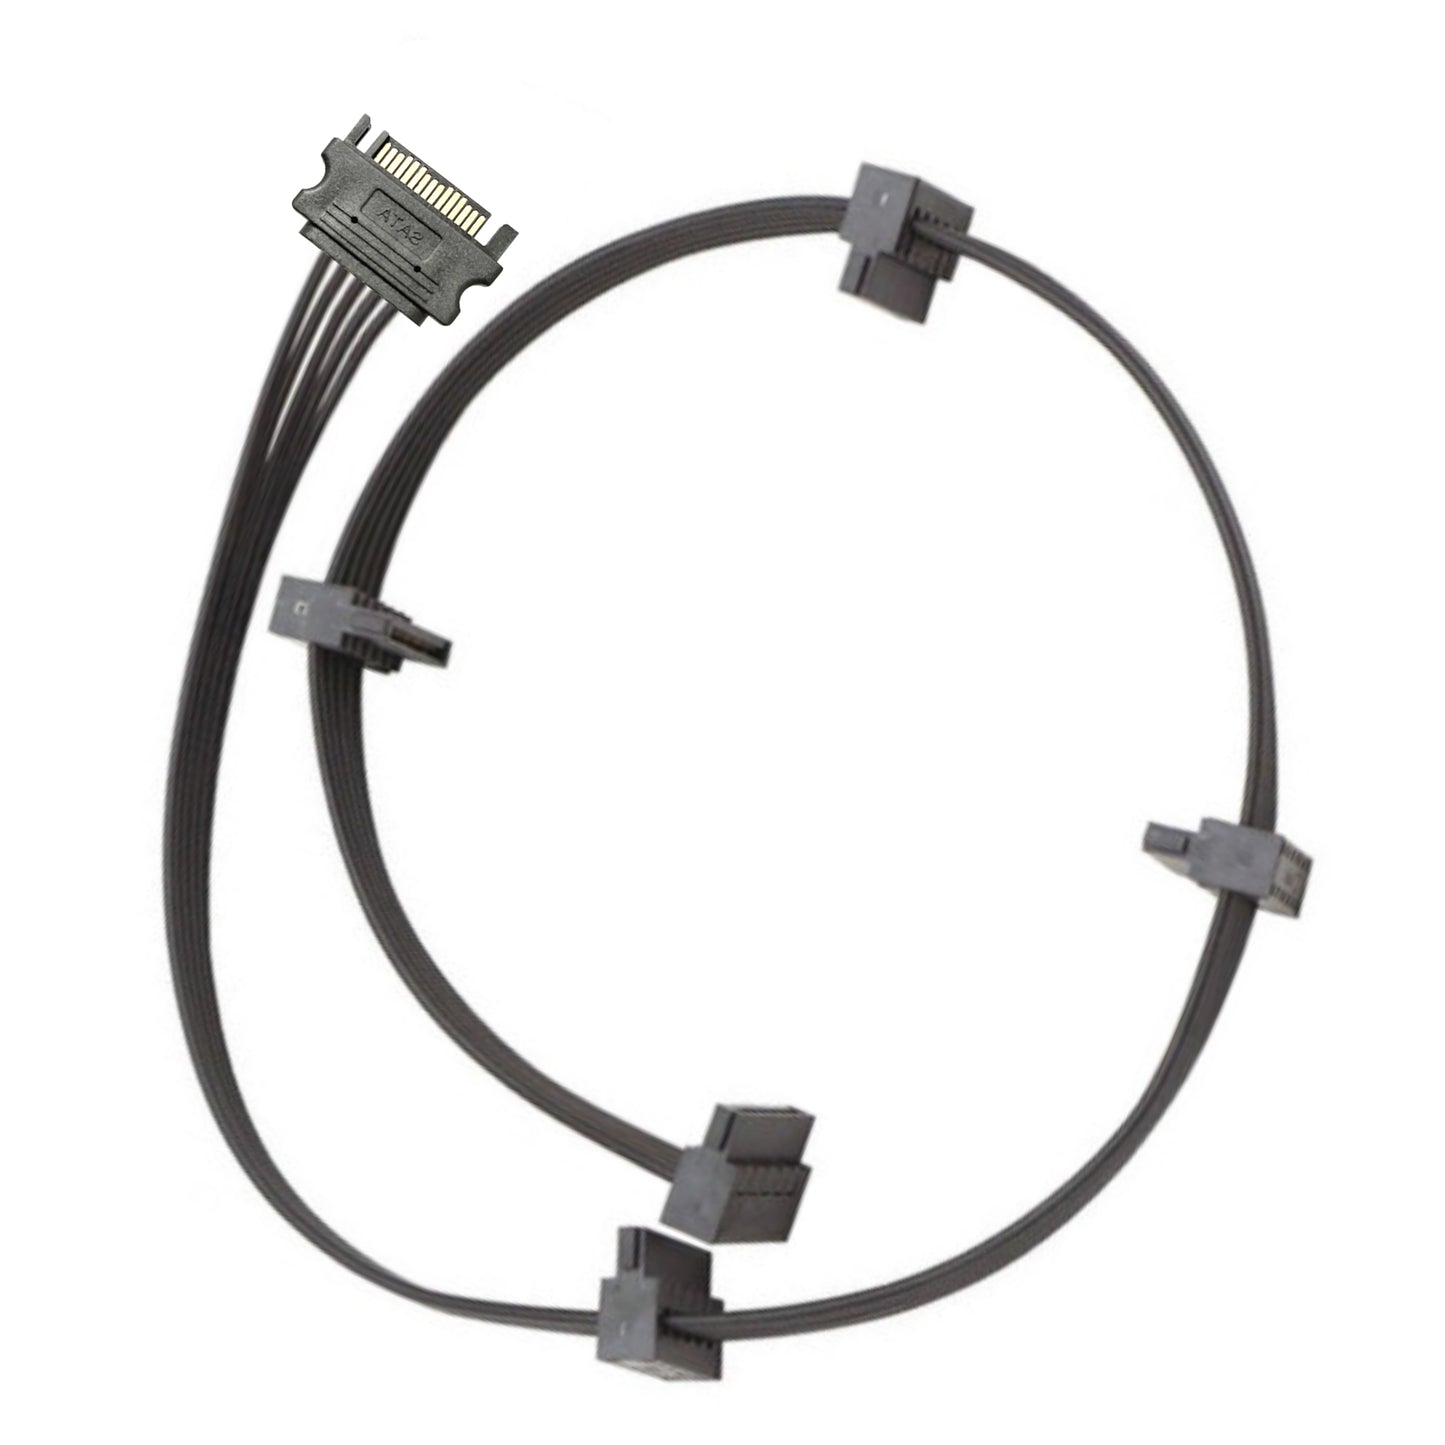 Cruxtec SATA Power Splitter Cable 15pin Male to 5 x 15pin Female 90° 40cm